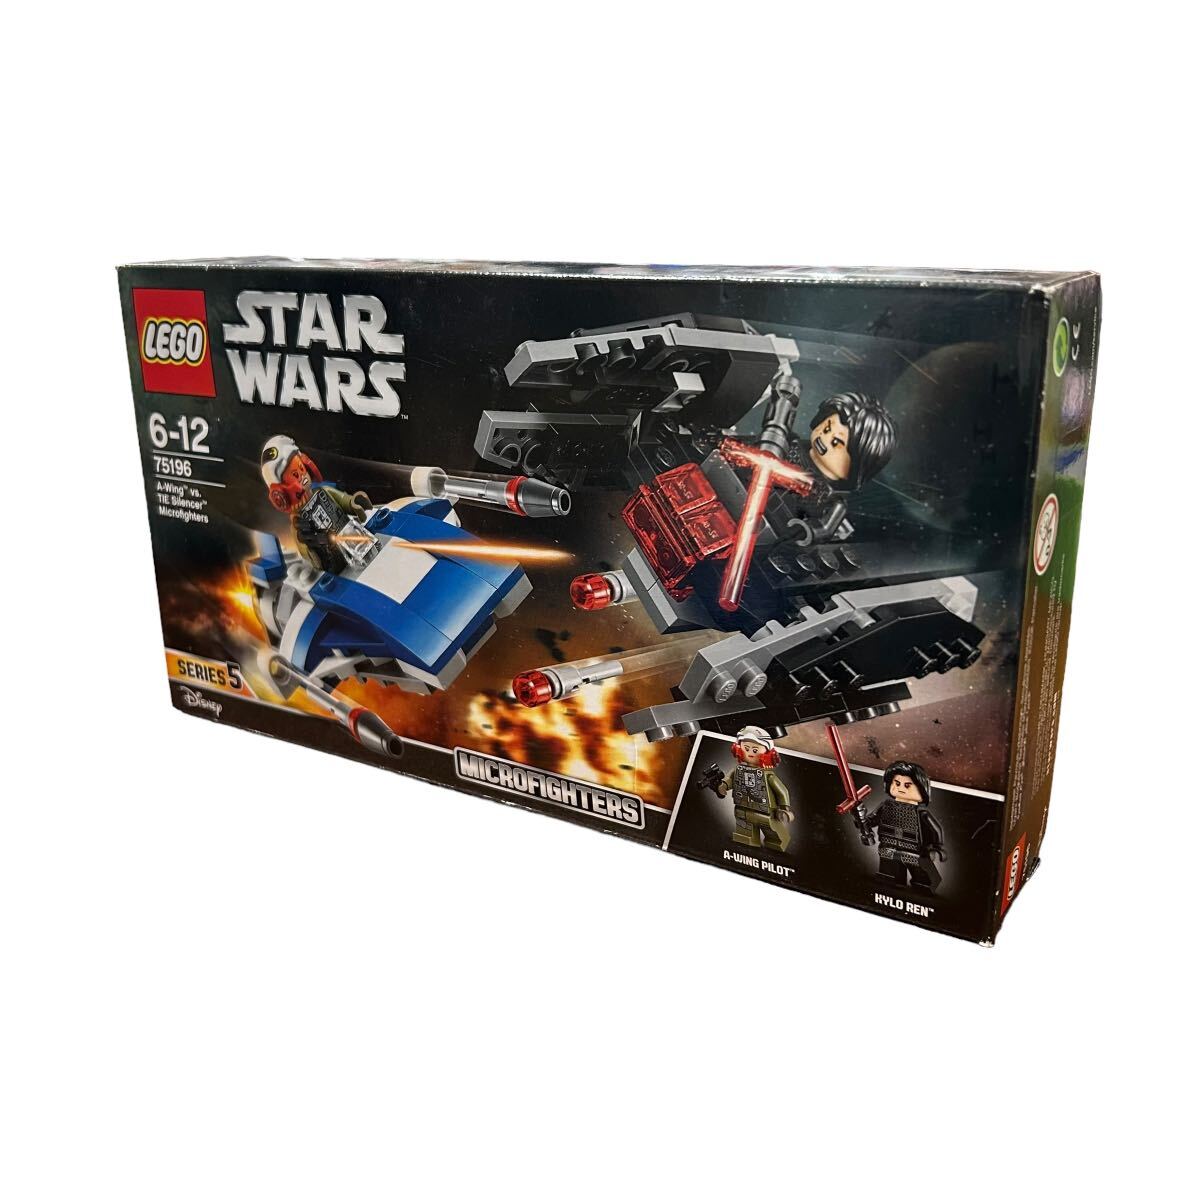 LEGO STARWARS 6-12 75196 Lego Звездные войны нераспечатанный Disney микро Fighter zA-Wing vs TIE Silencer